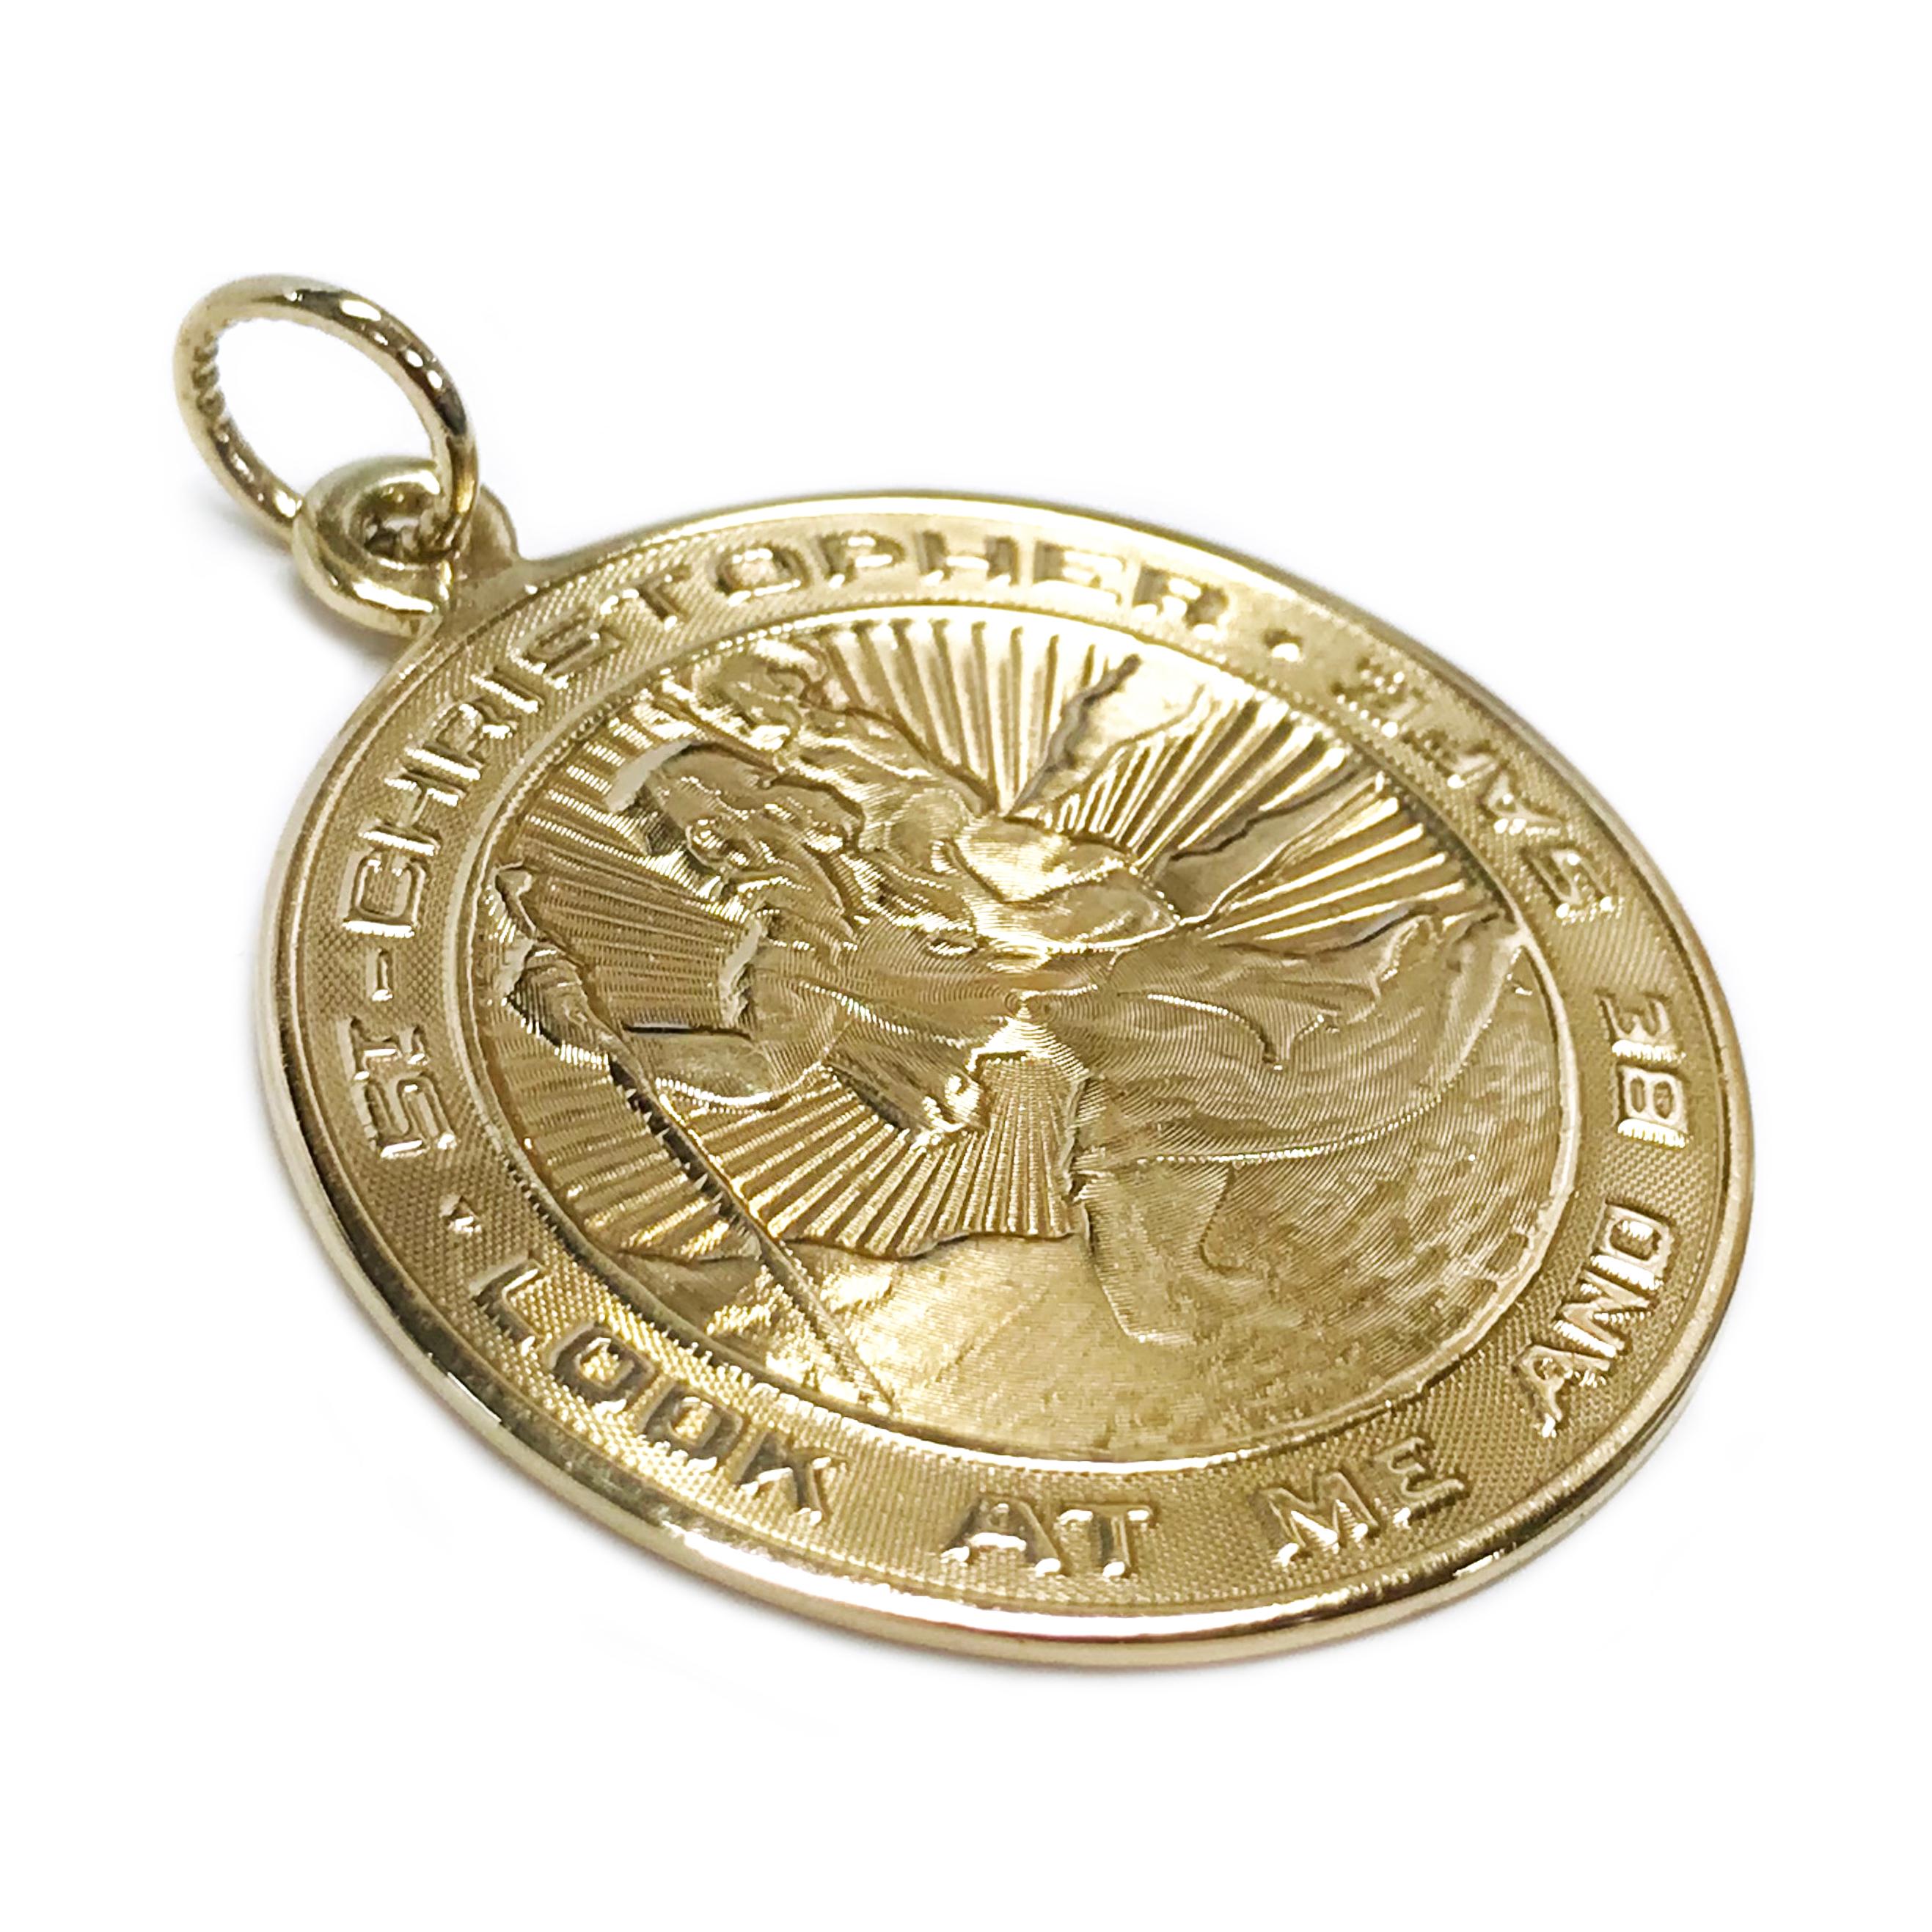 14 Karat St. Christopher Medallion Pendant. The pendant measures 30.0mm in diameter. The front of the pendant features Saint Christopher and the words 